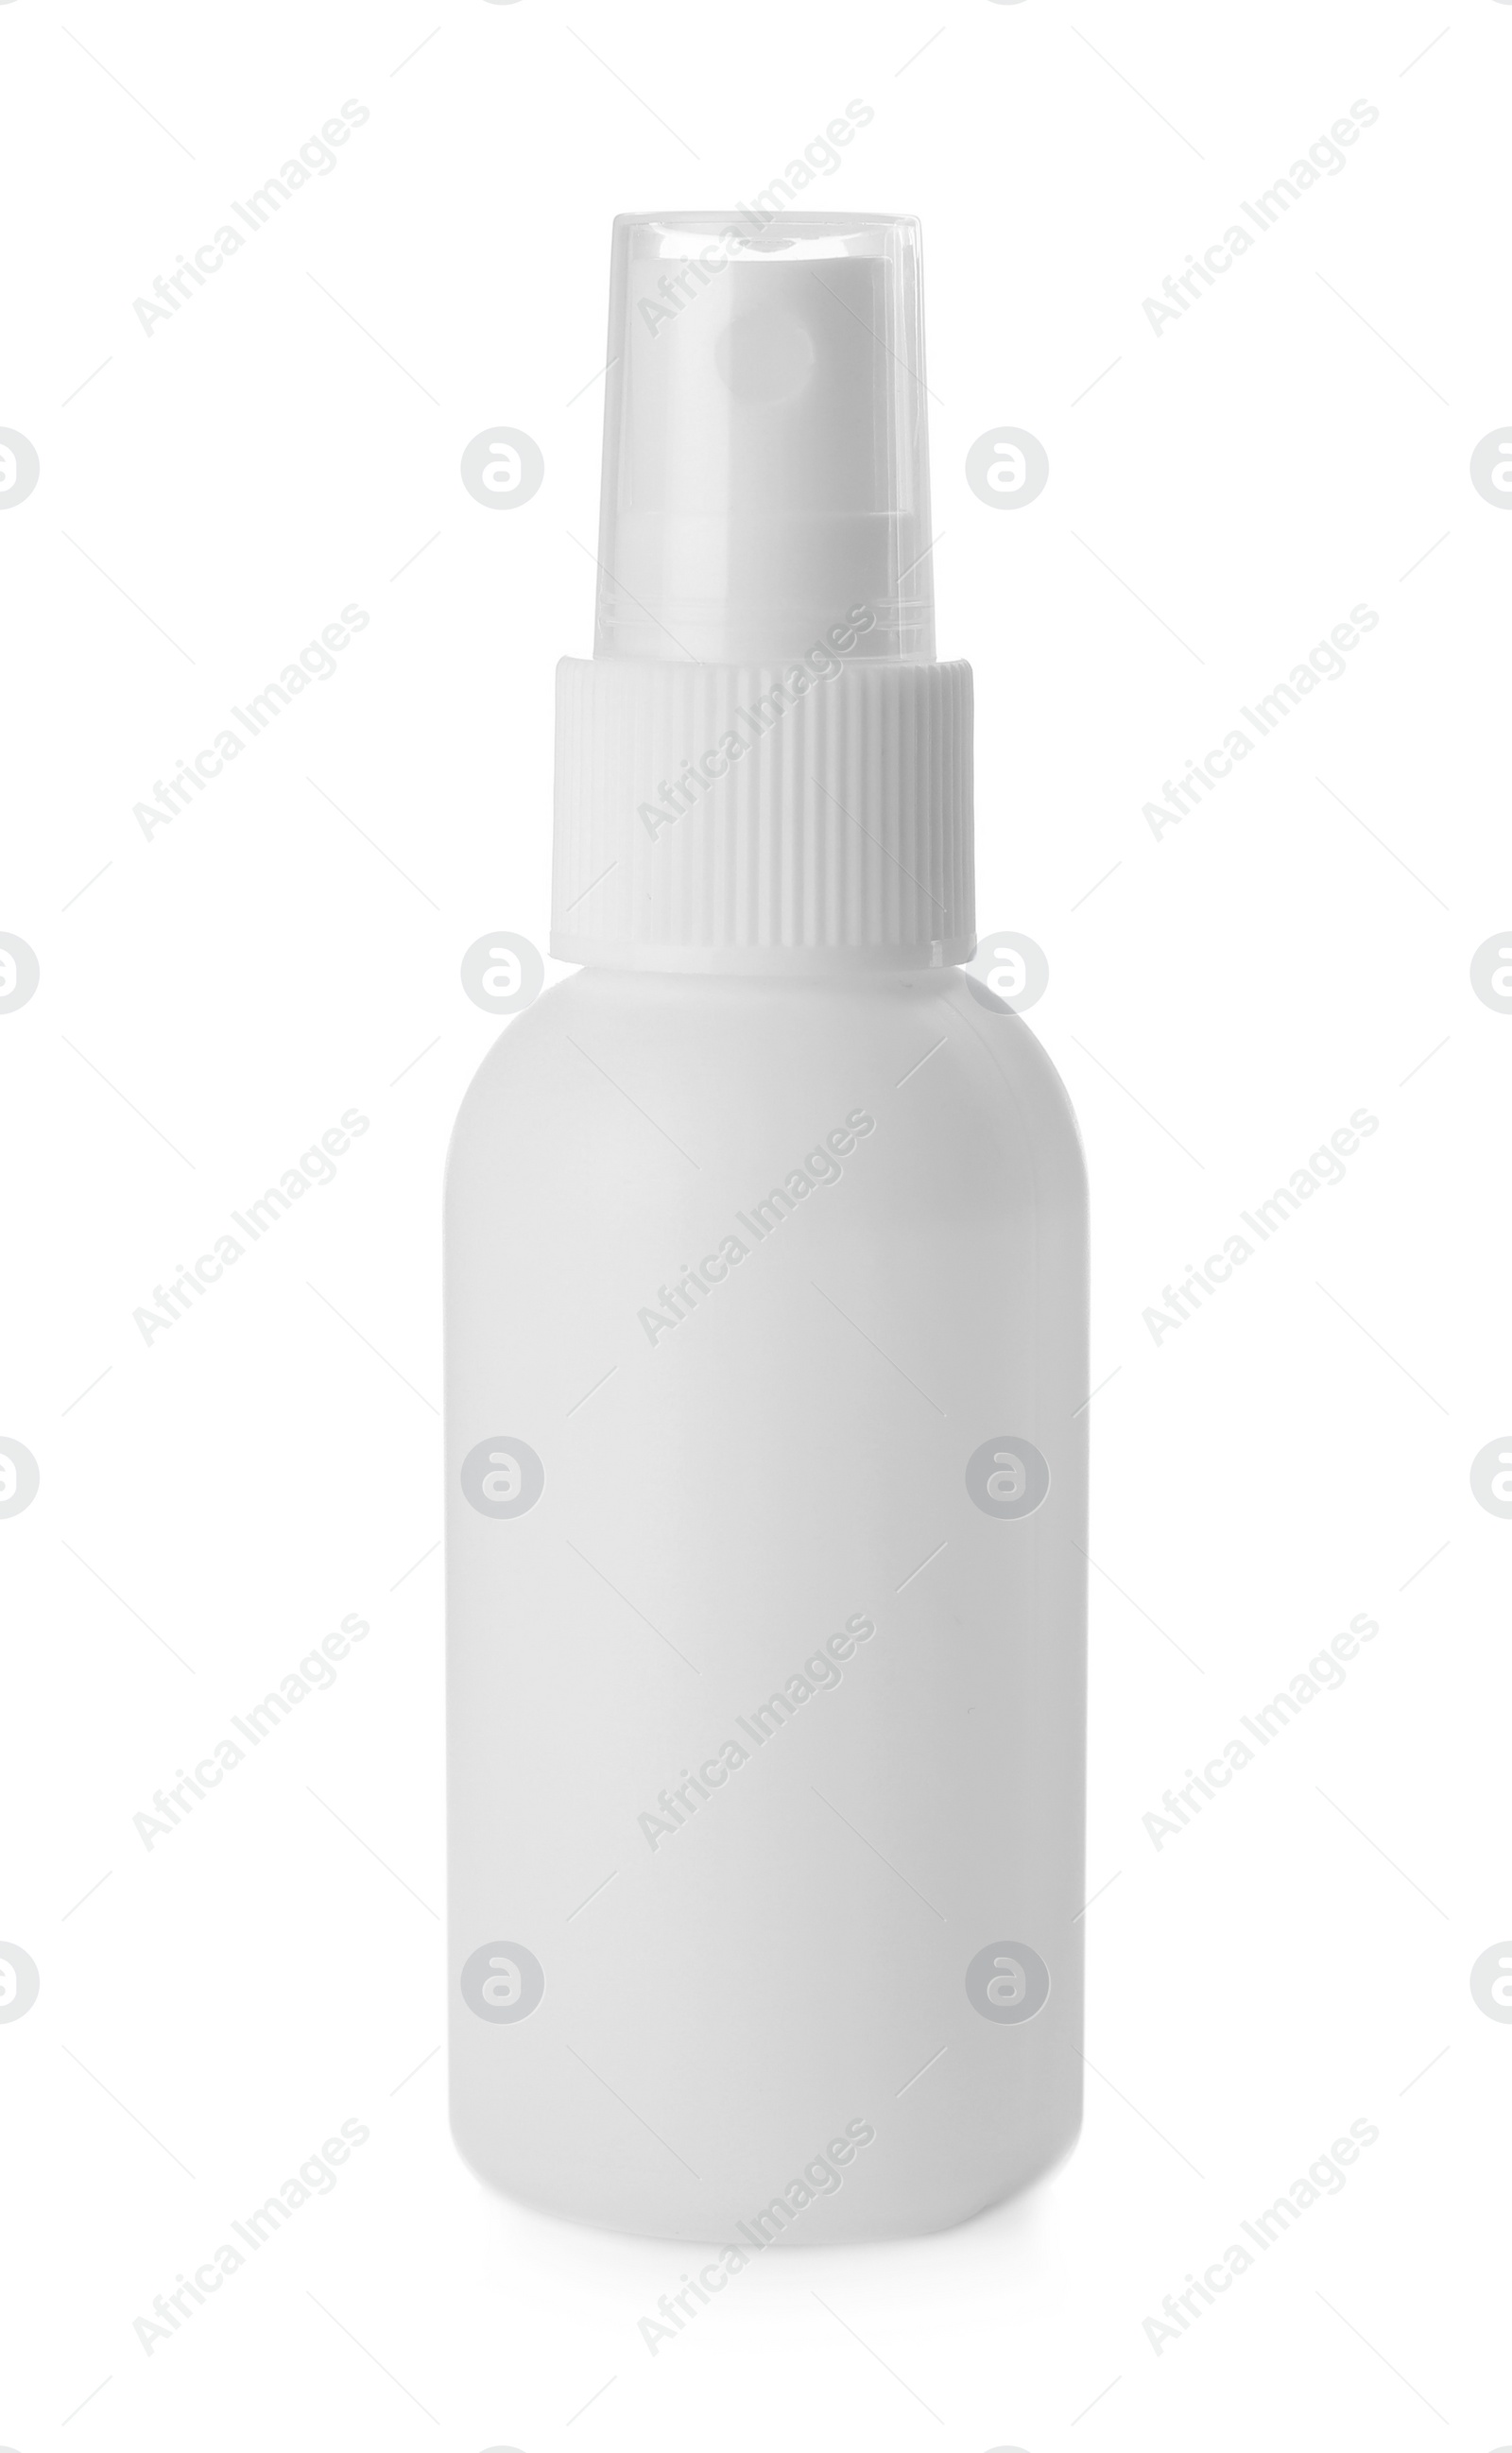 Photo of Spray bottle with antiseptic isolated on white